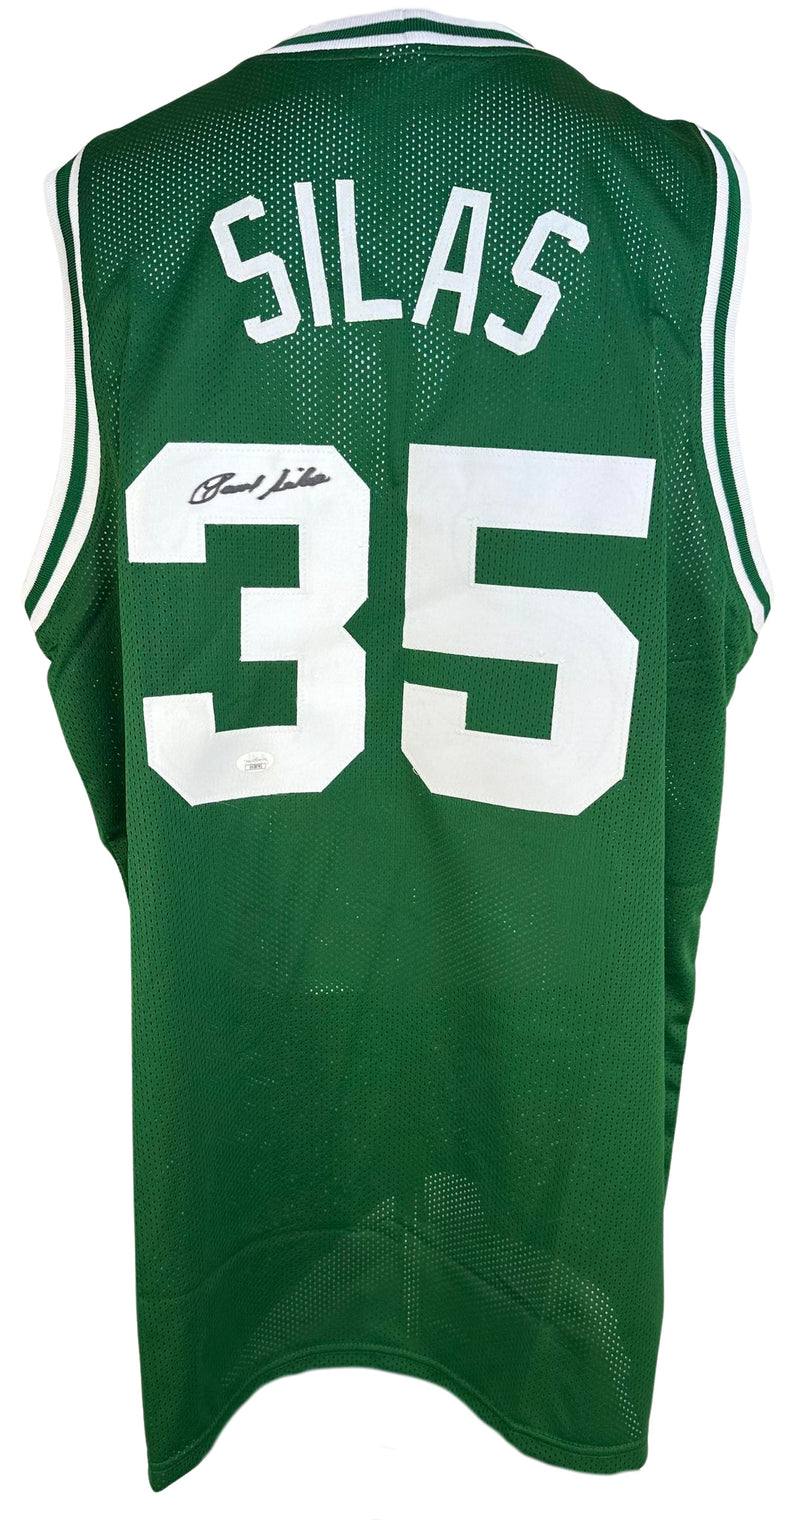 Paul Silas autographed signed jersey NBA Boston Celtics JSA COA Denver Nuggets